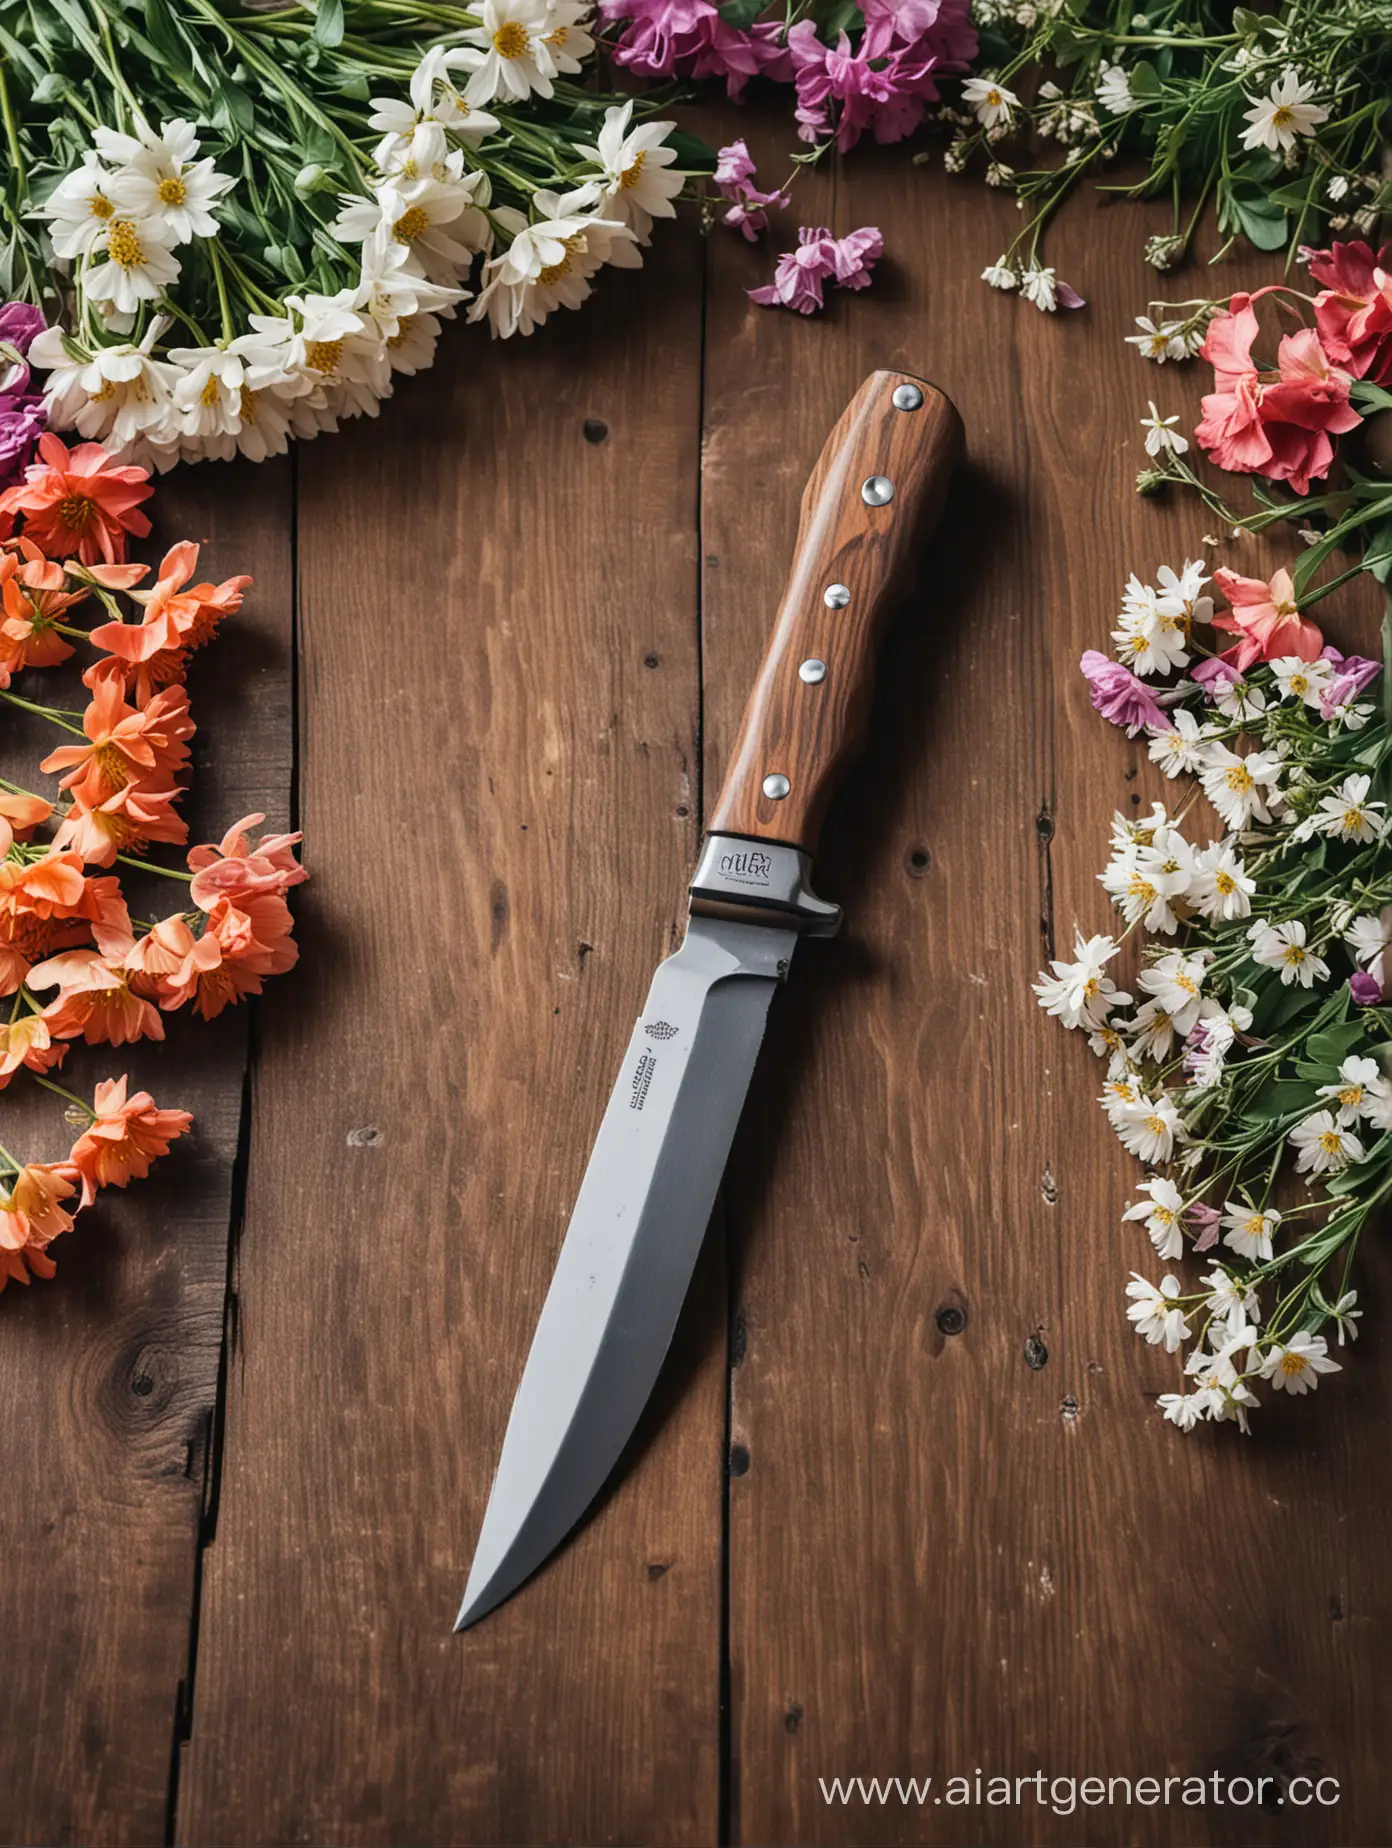 Knife-Resting-Amongst-Flowers-on-Wooden-Table